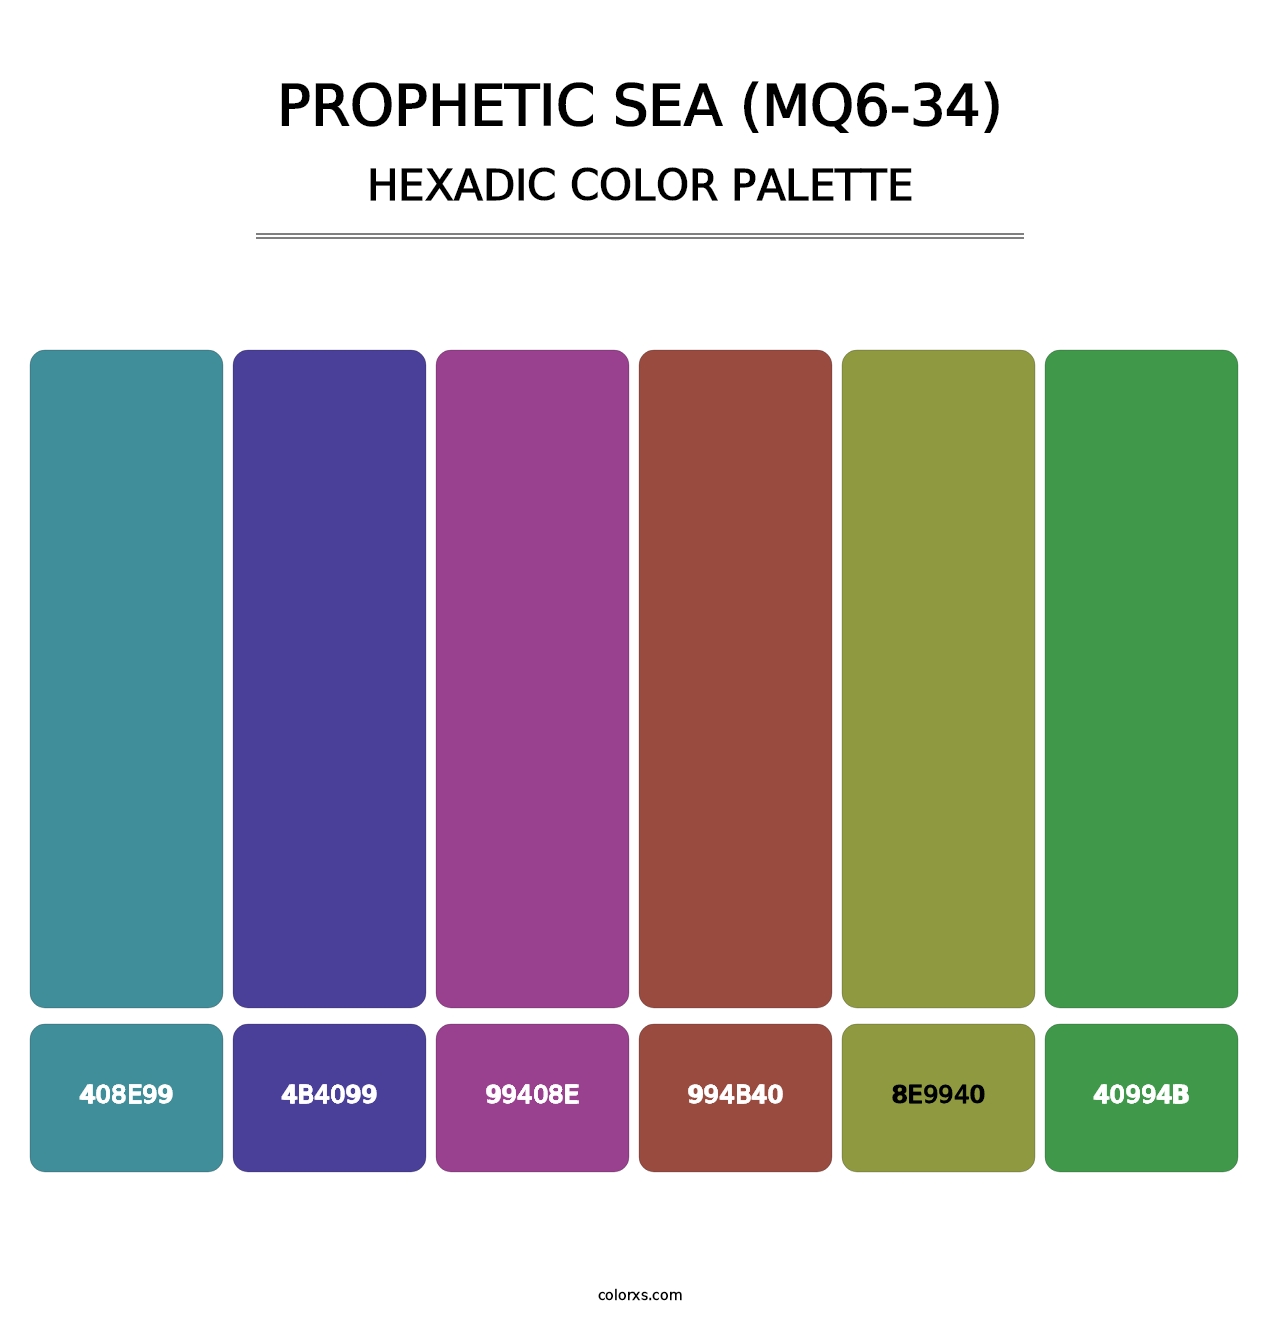 Prophetic Sea (MQ6-34) - Hexadic Color Palette